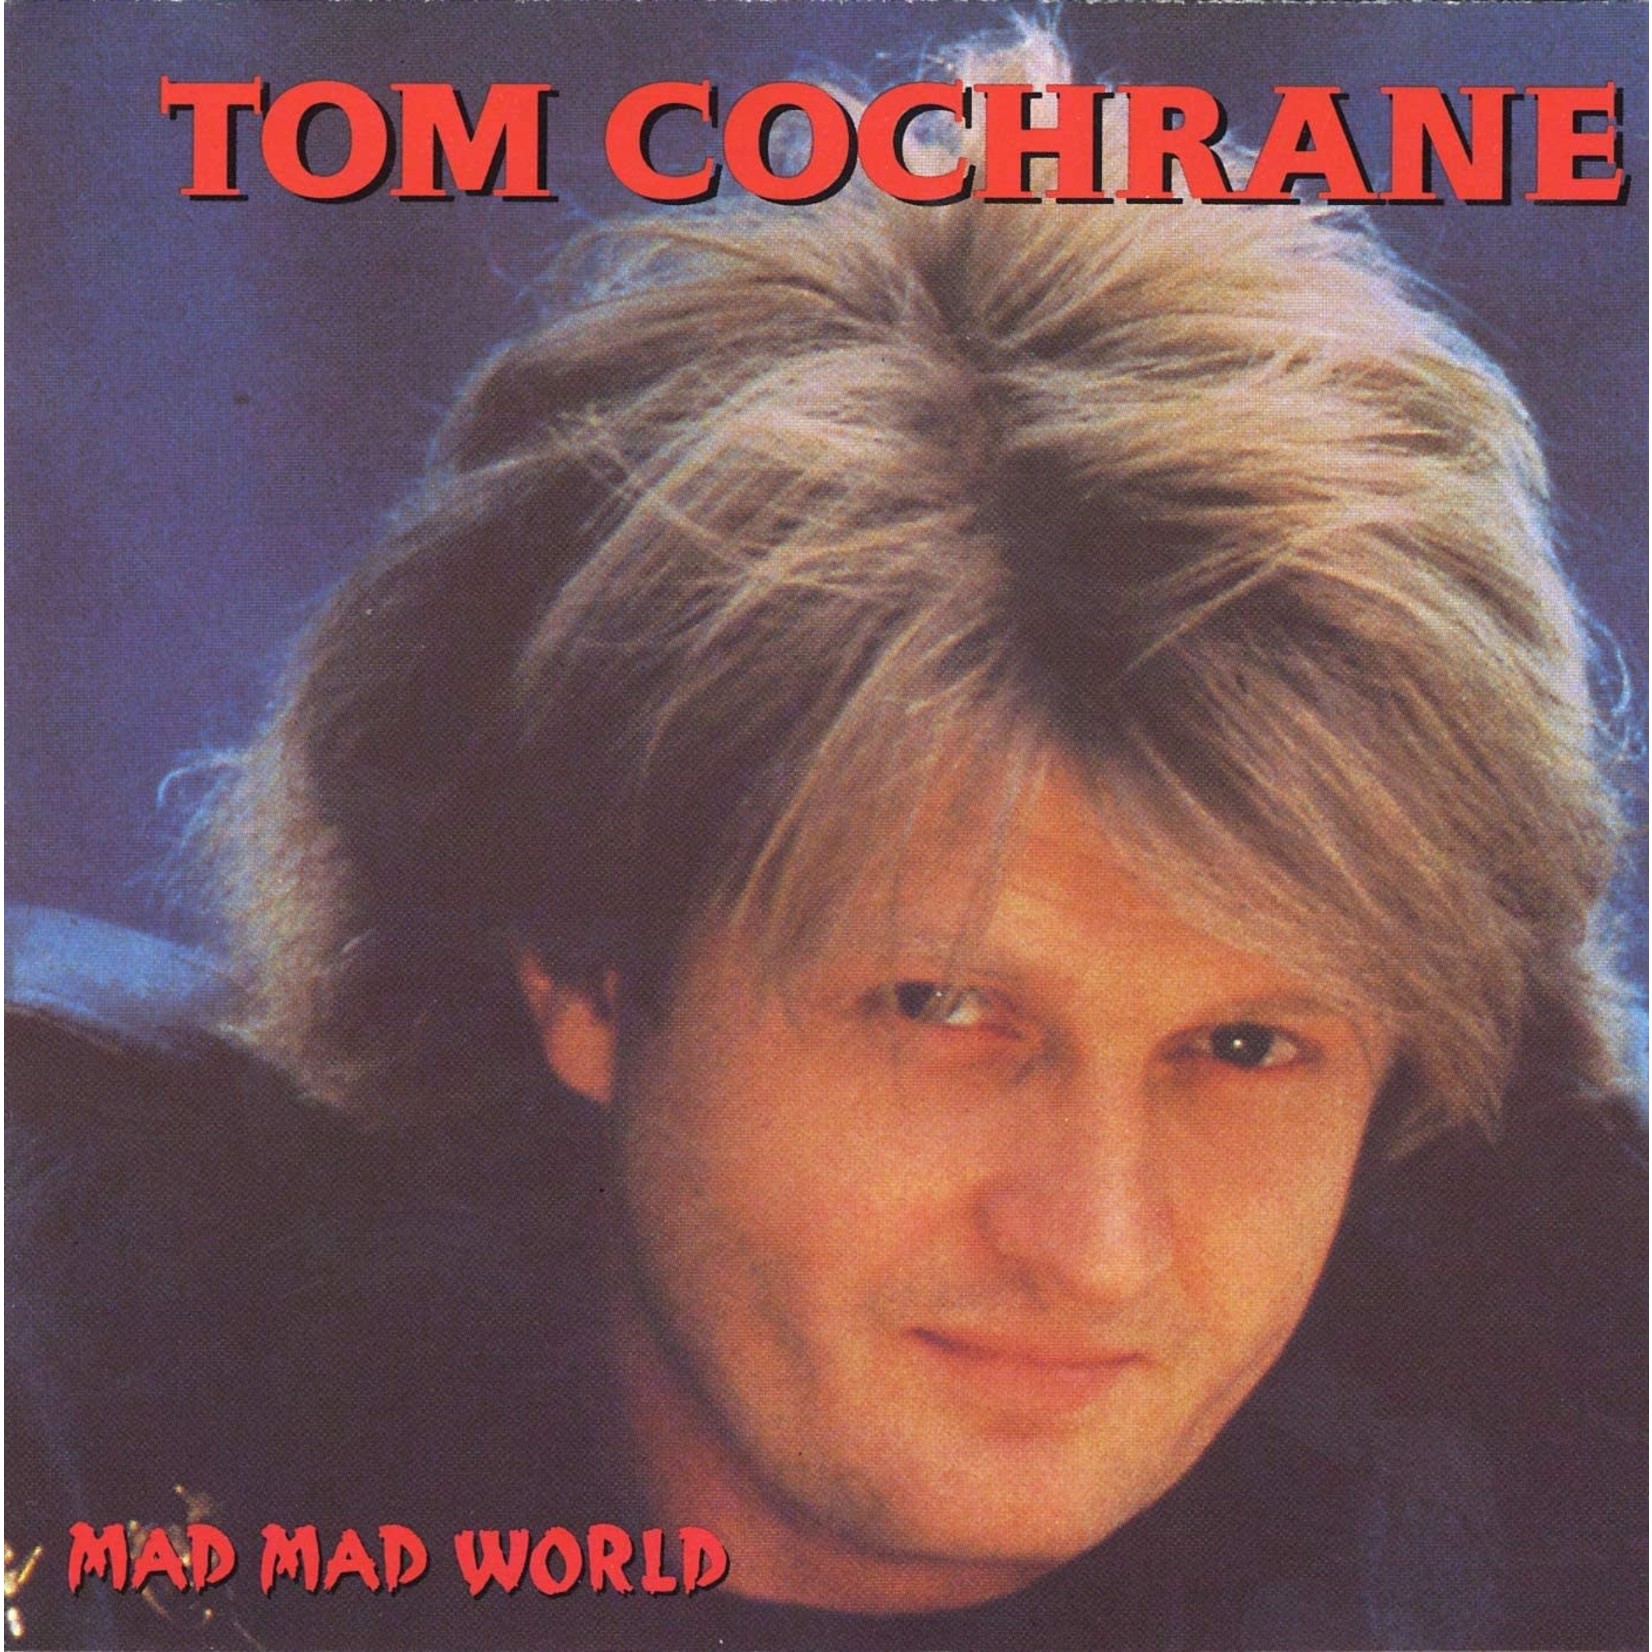 Tom Cochrane - Mad Mad World [USED CD]